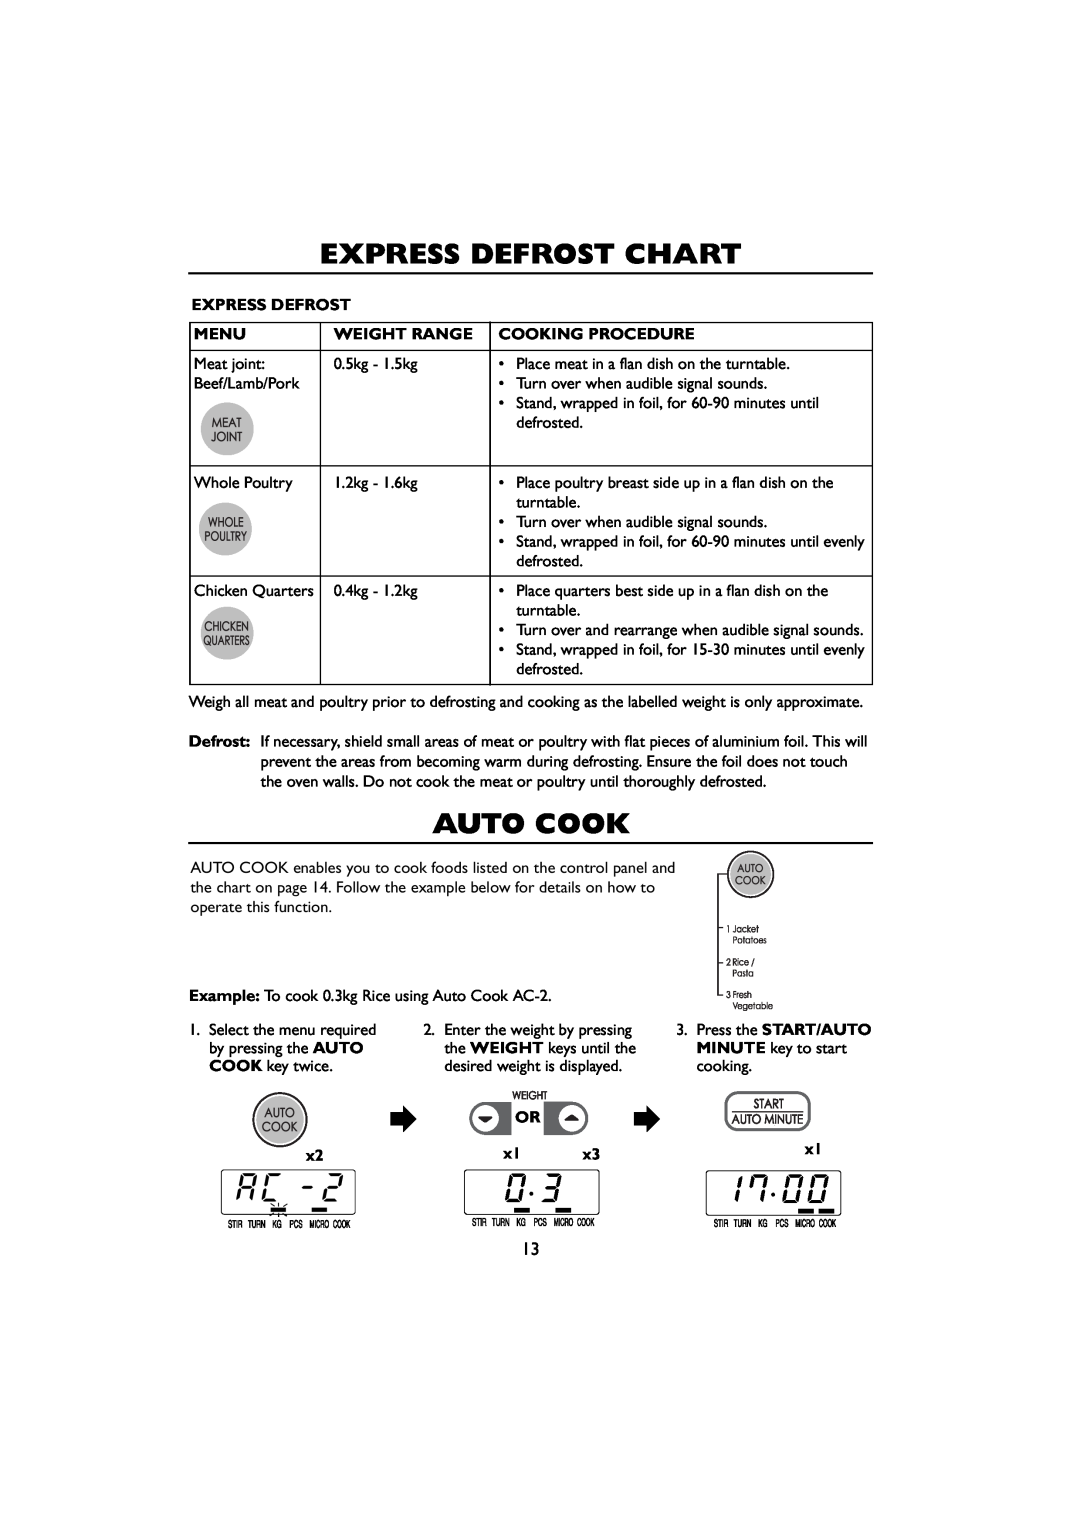 Sharp R-259 operation manual Express Defrost Chart, Auto Cook, Menu, Weight Range, Cooking Procedure 